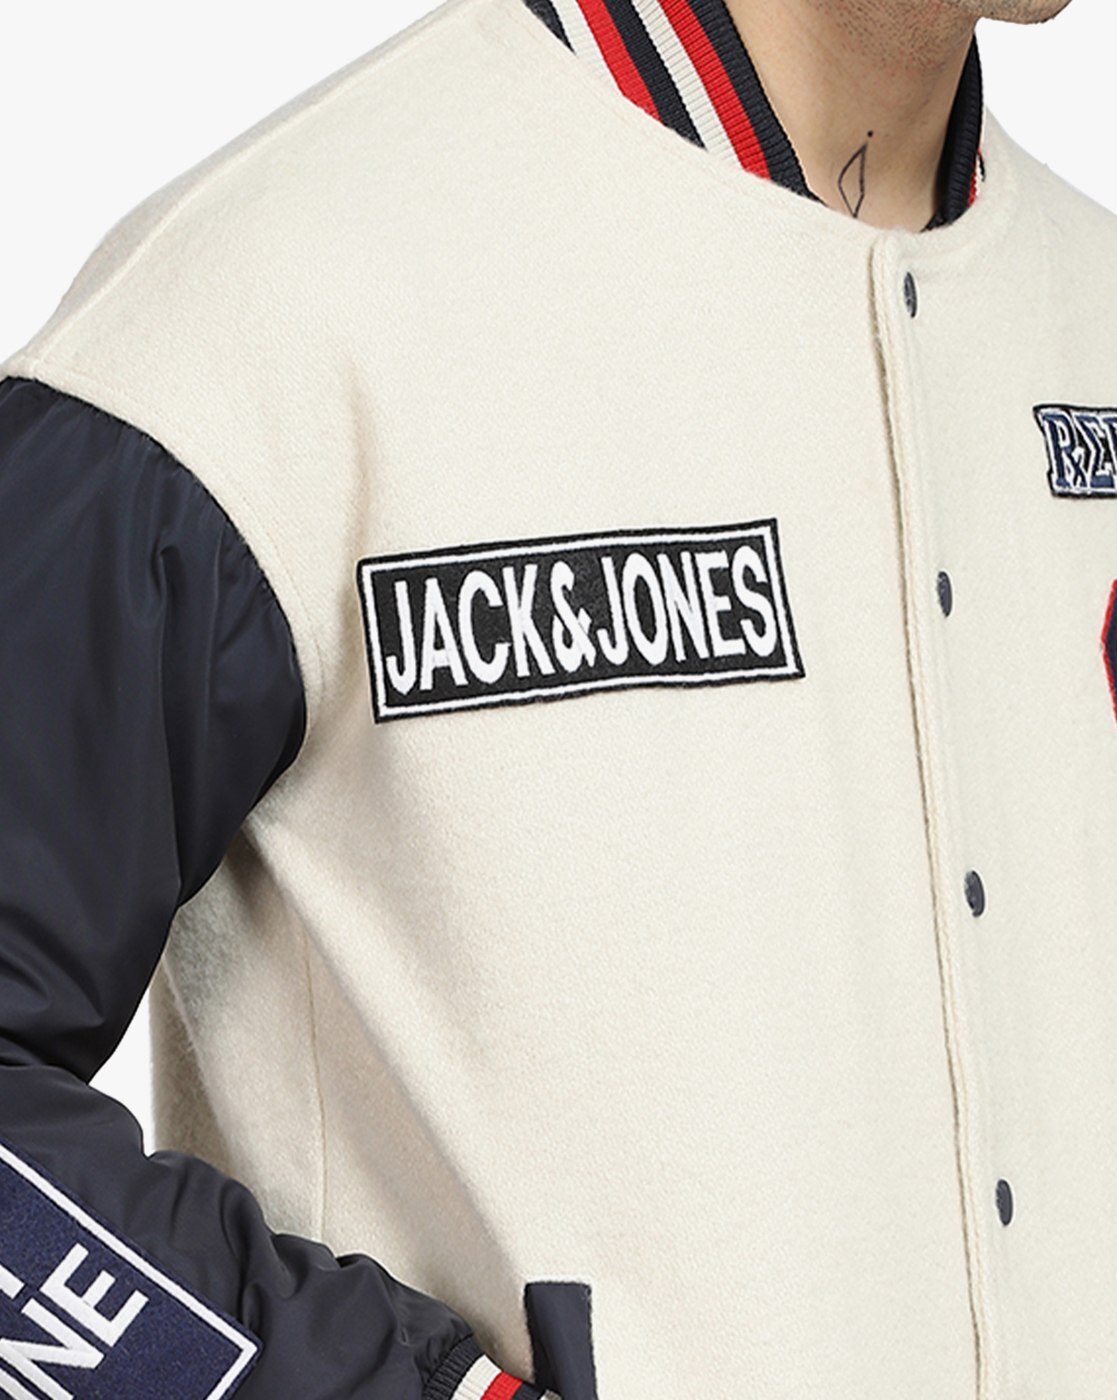 Jack & Jones varsity jacket in black | ASOS